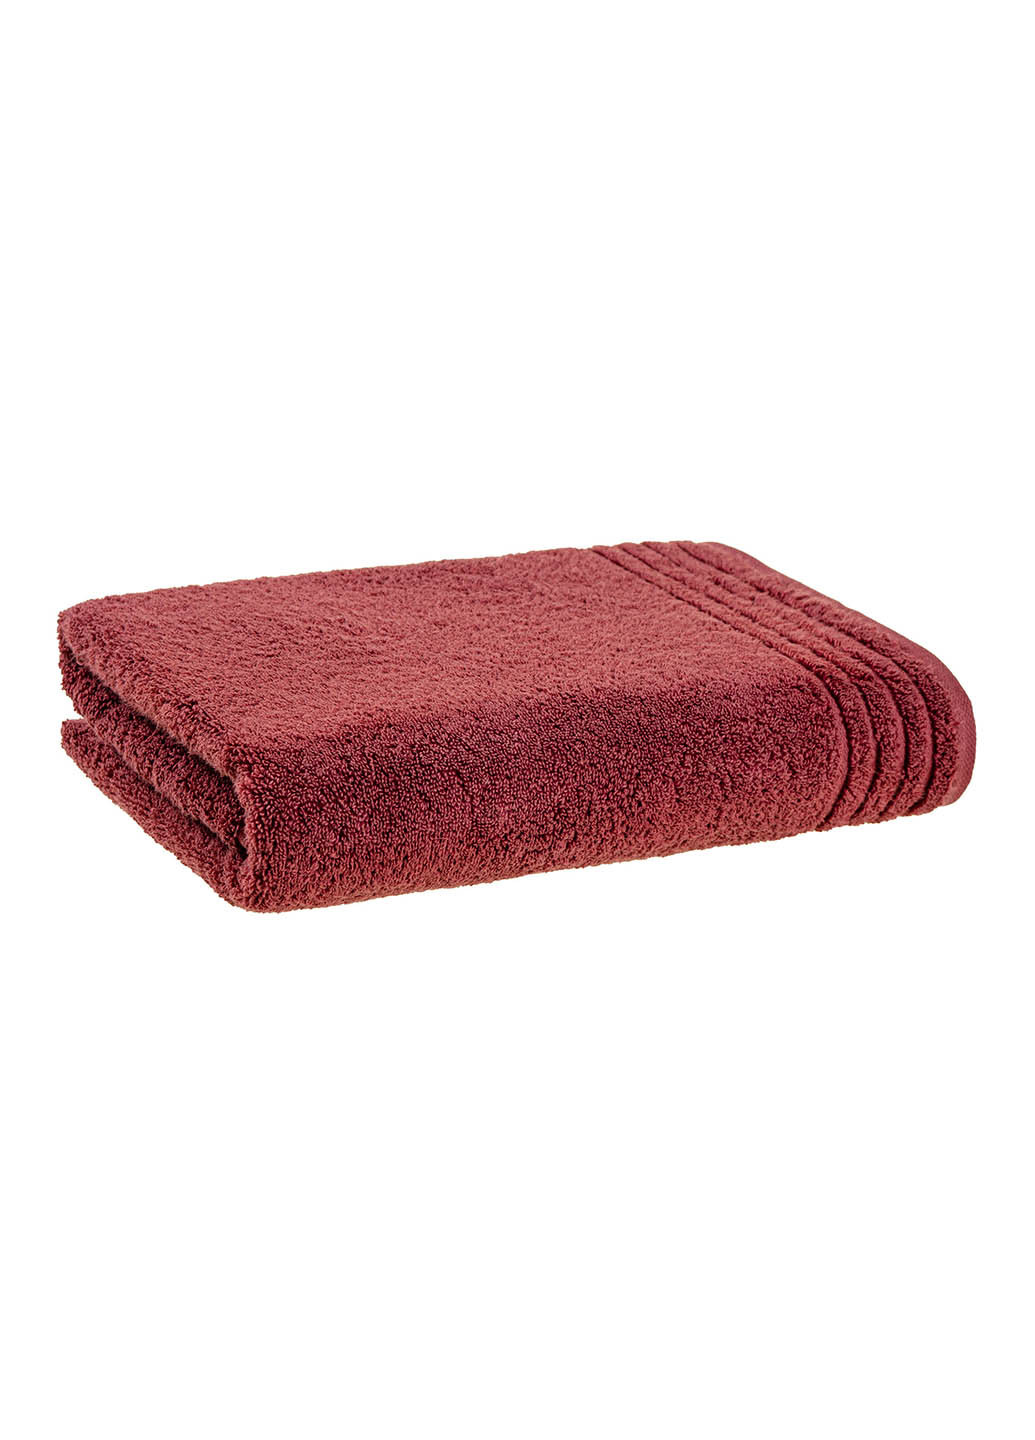 Home Line полотенце махровое 70х140 500 г/м2 красный производство - Турция